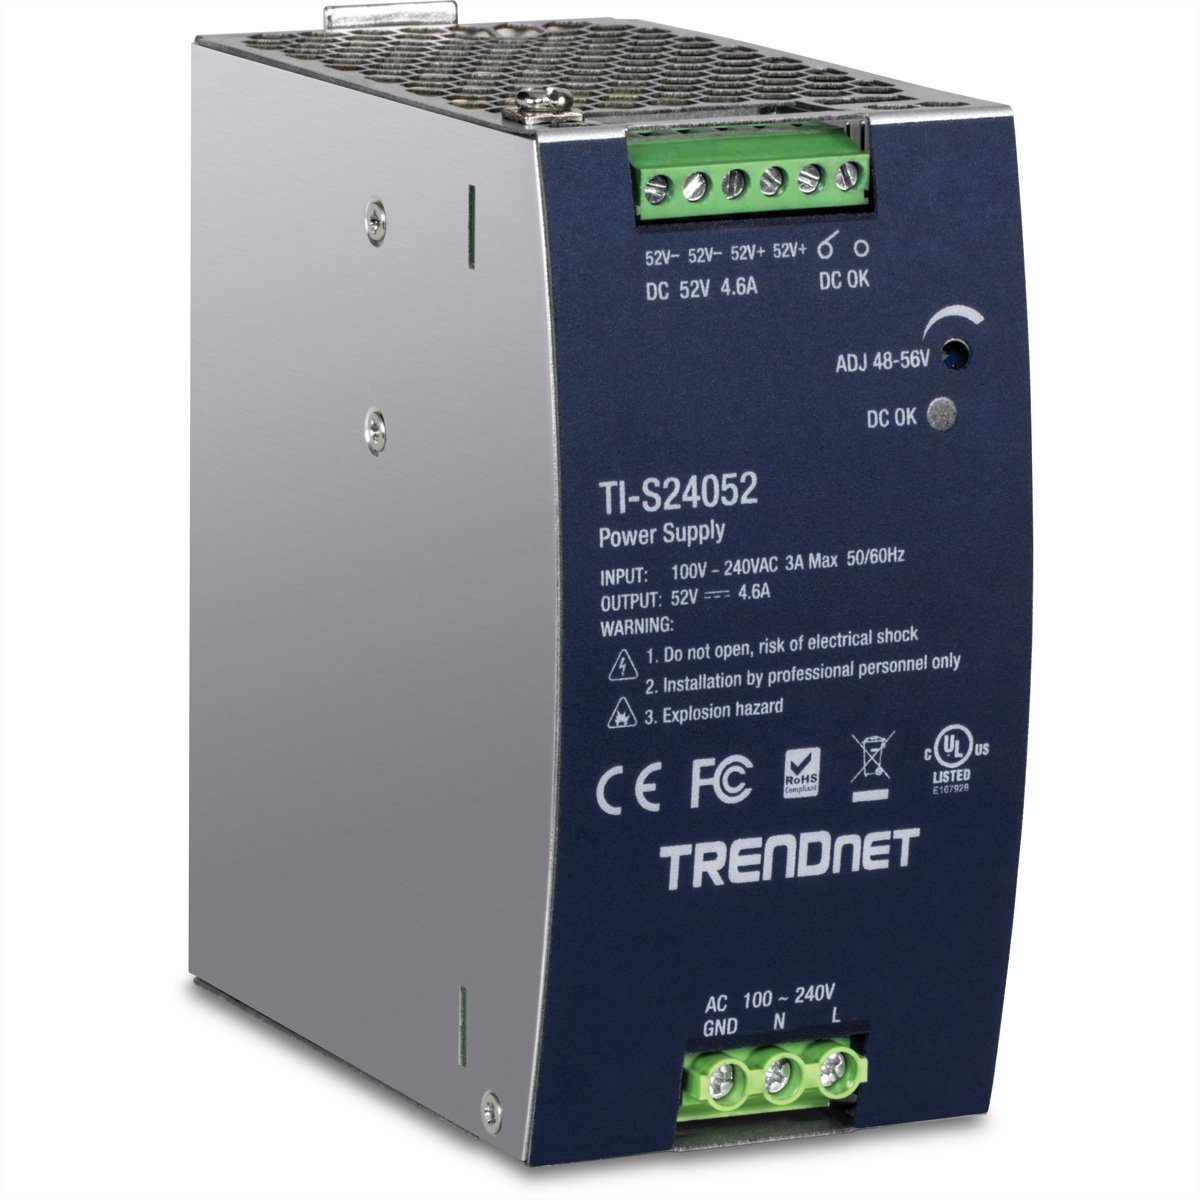 Trendnet TI-S24052 DIN-Rail Power Supply Netzwerk-Switch (240W, 52V DC, 4.61A AC zu DC mit PFC) | Switch